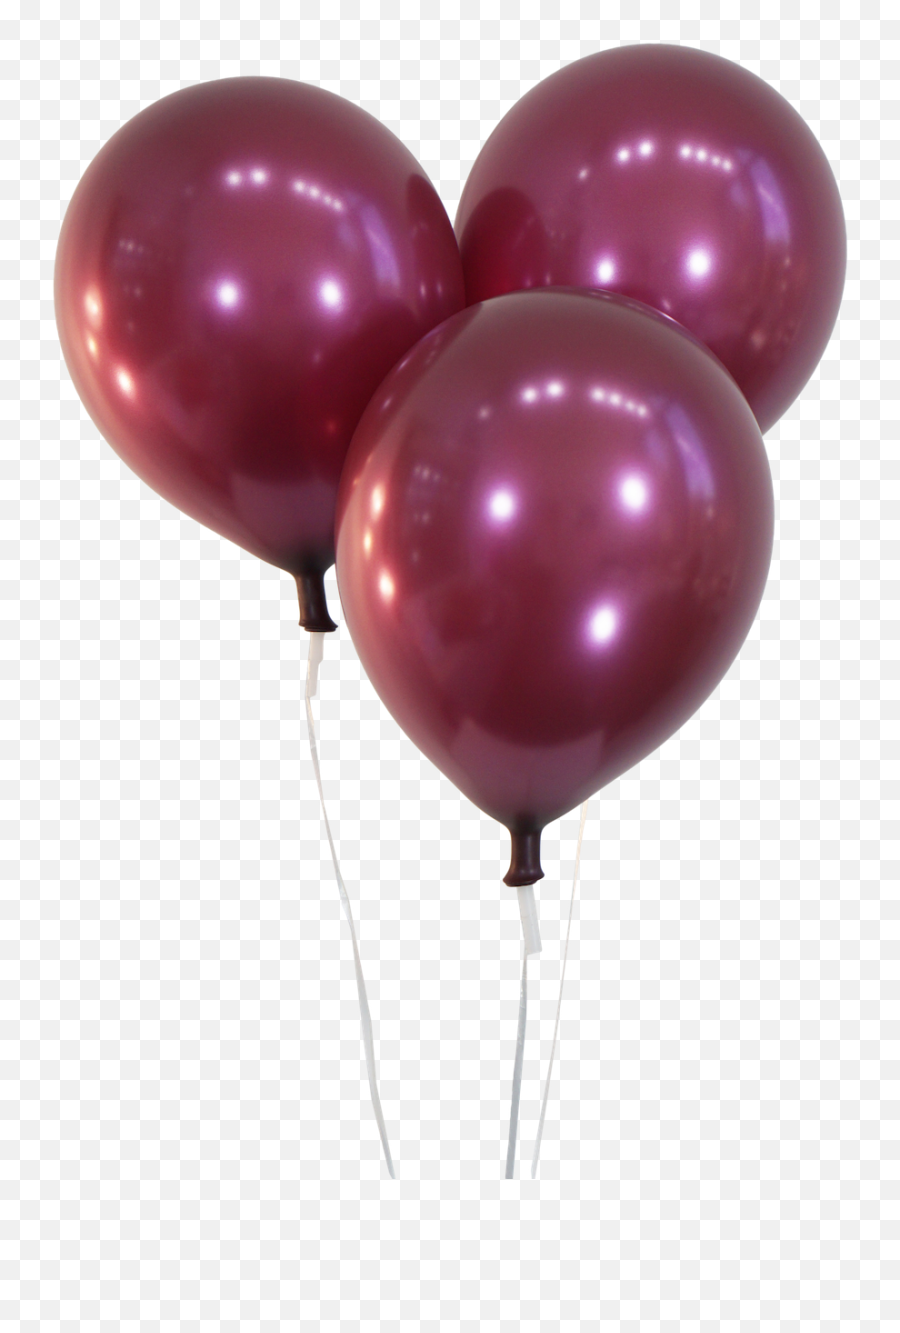 12 Latex Balloons Metallic Burgundy - Burgundy Metallic Balloons Png,Purple Balloons Png